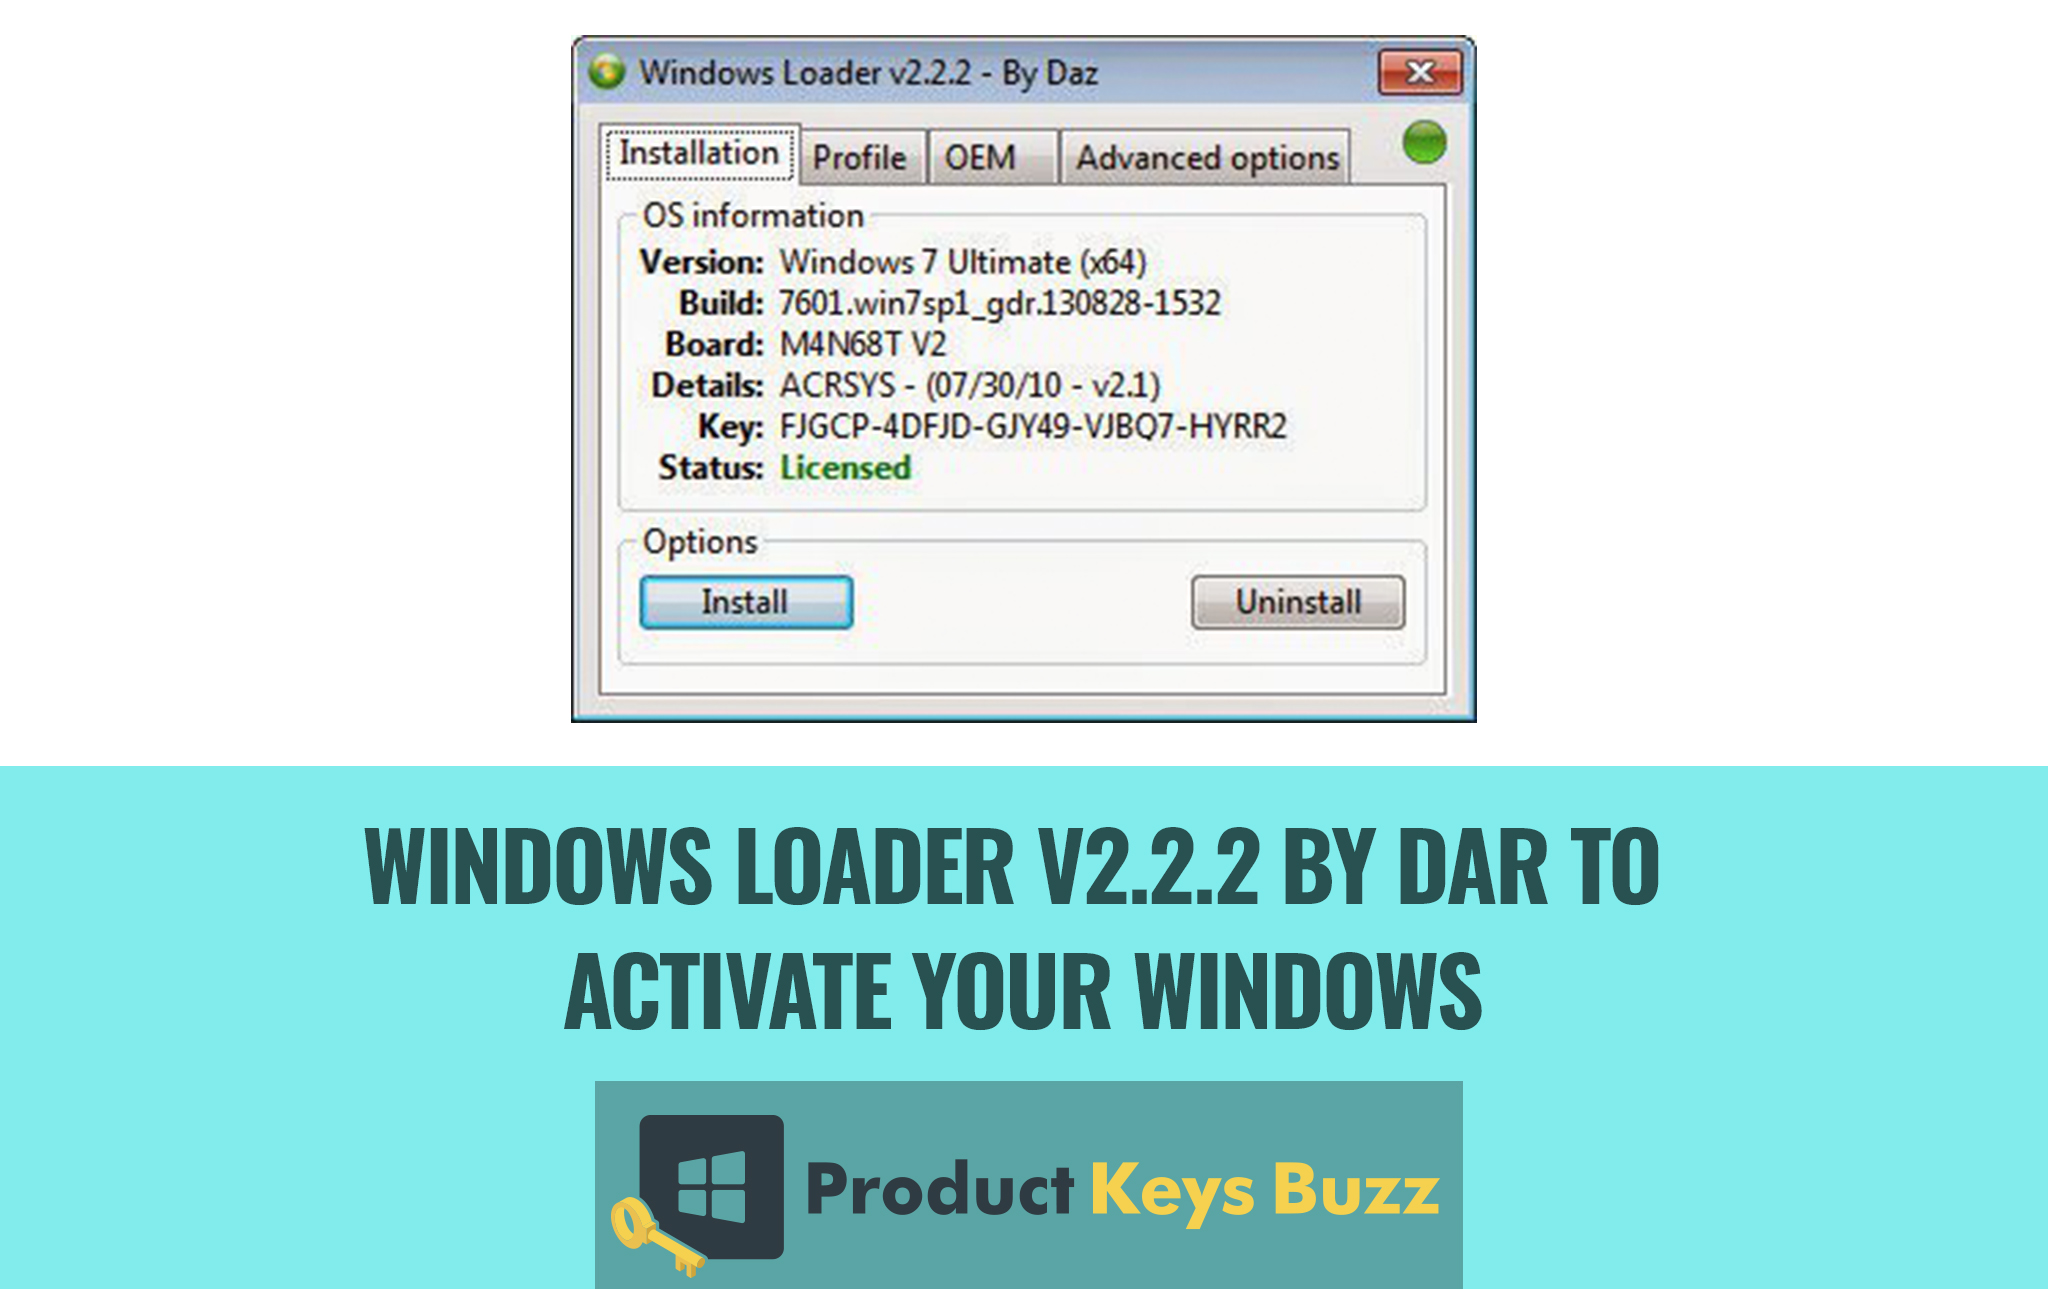 Активатор windows daz. Windows Loader. Windows Loader by Daz. Активатор Windows 7 Loader by Daz. Windows Loader 2.2.2 by Daz.